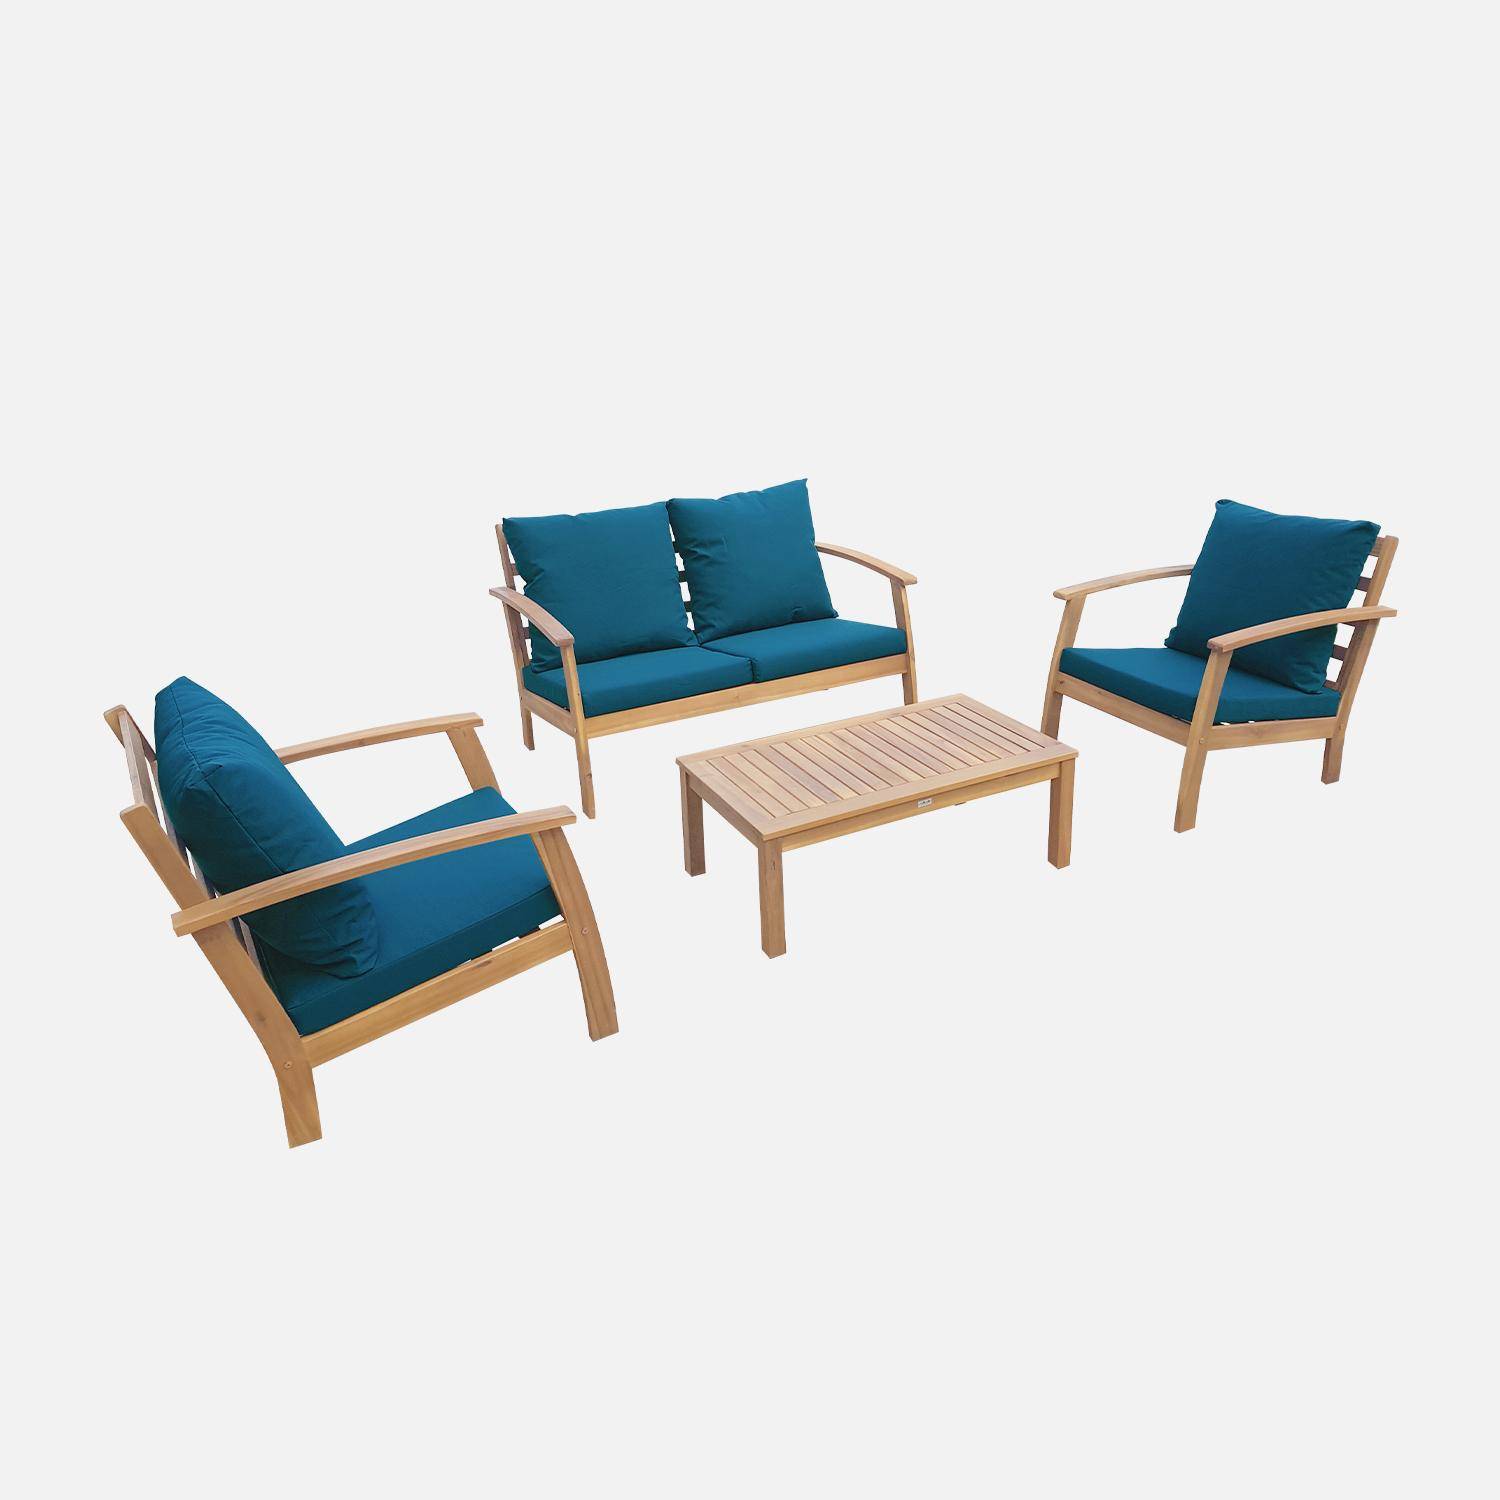 Conjunto de jardín de madera 4 plazas - Ushuaïa - Cojines azul pato, sofá de madera de acacia, sillones y mesa de centro Photo2